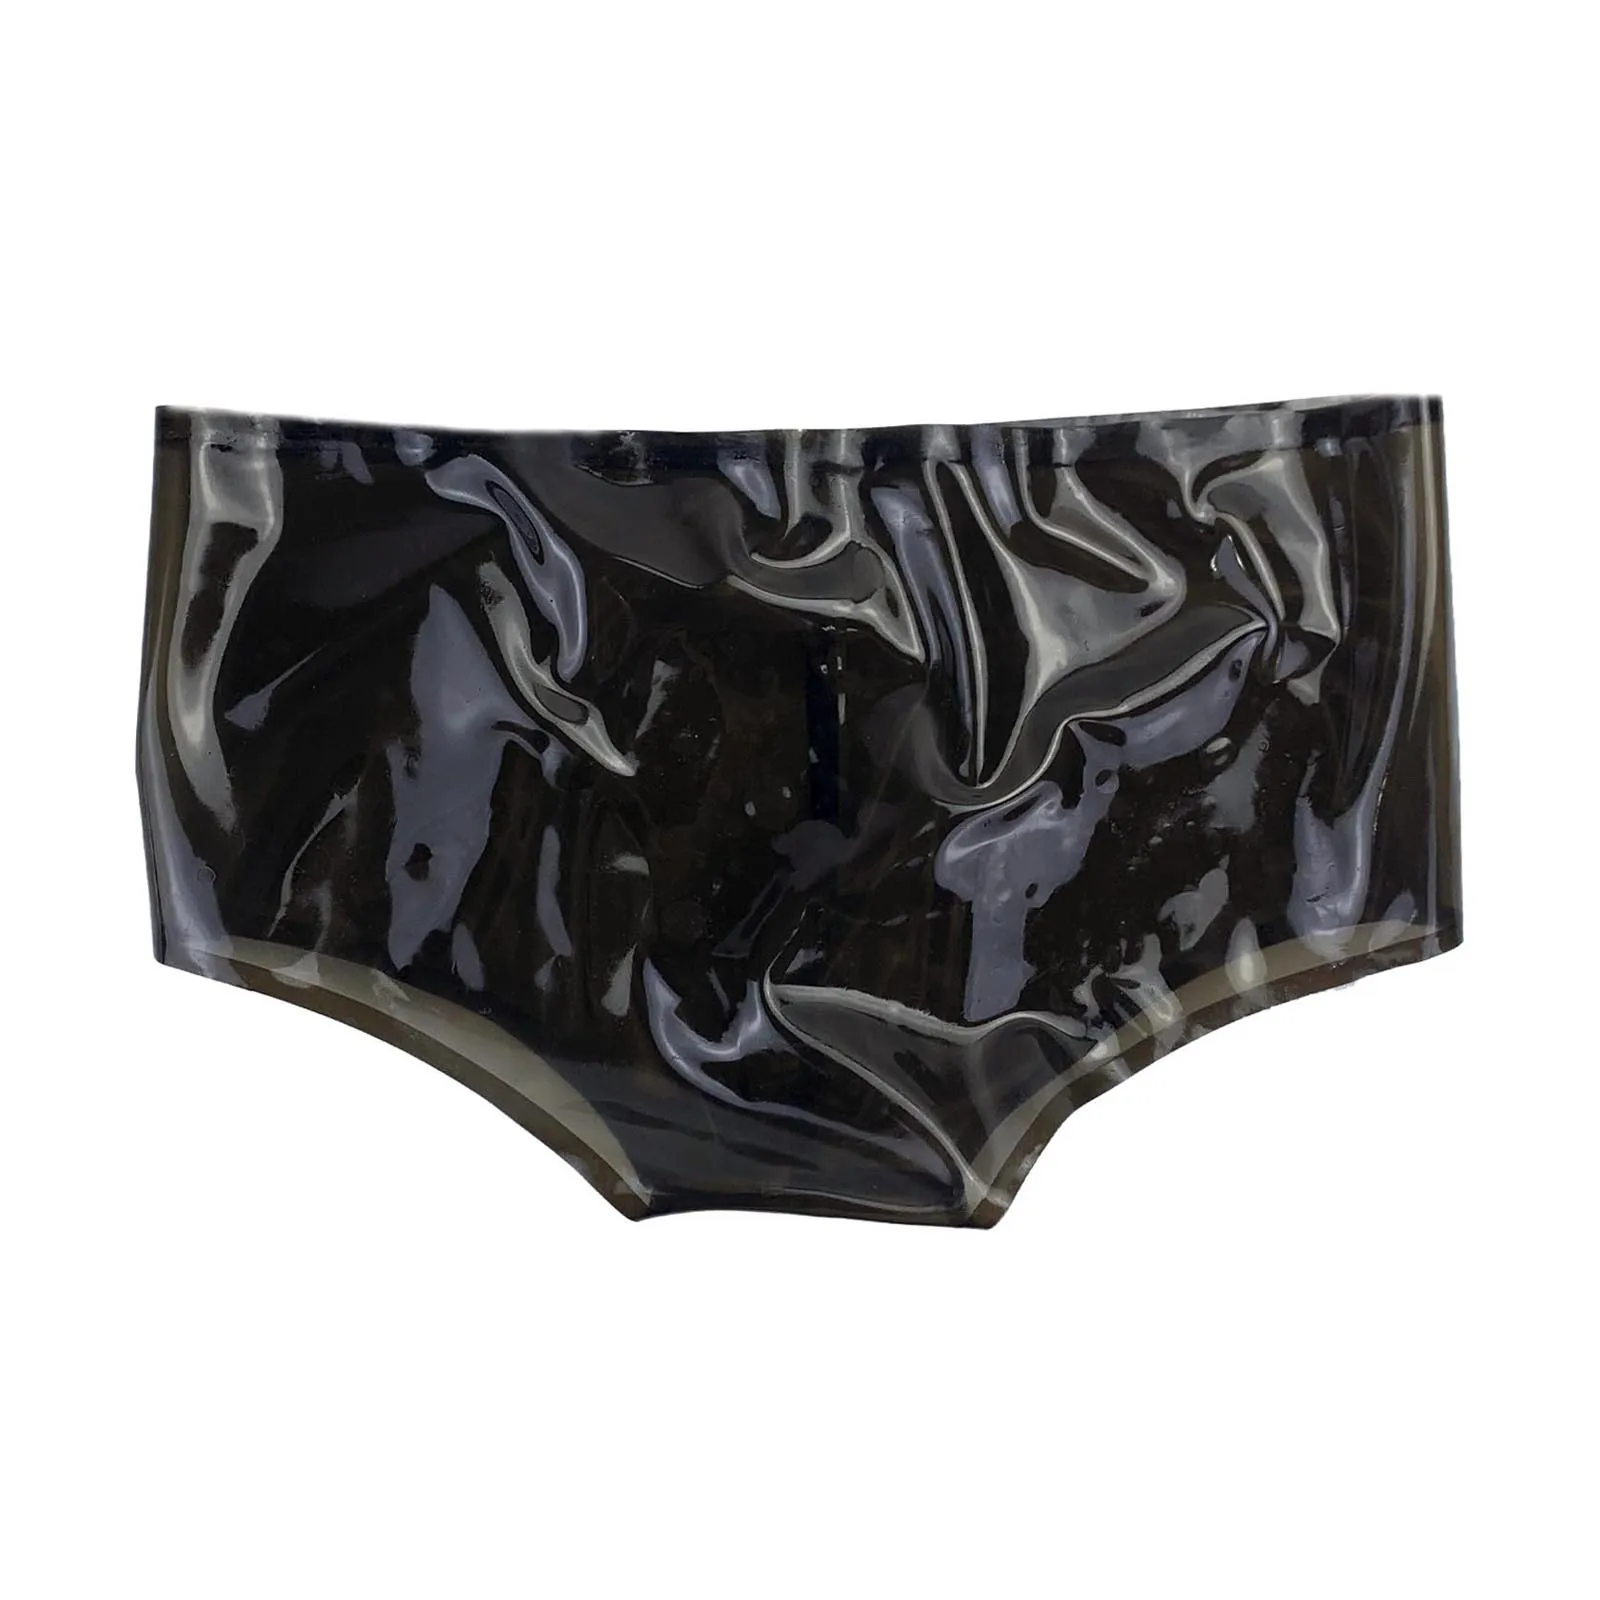 MONNIK Black Latex Men Underpants Handmade Briefs Rubber Tight Panties Shorts Underwear for Party Bodysuit Club